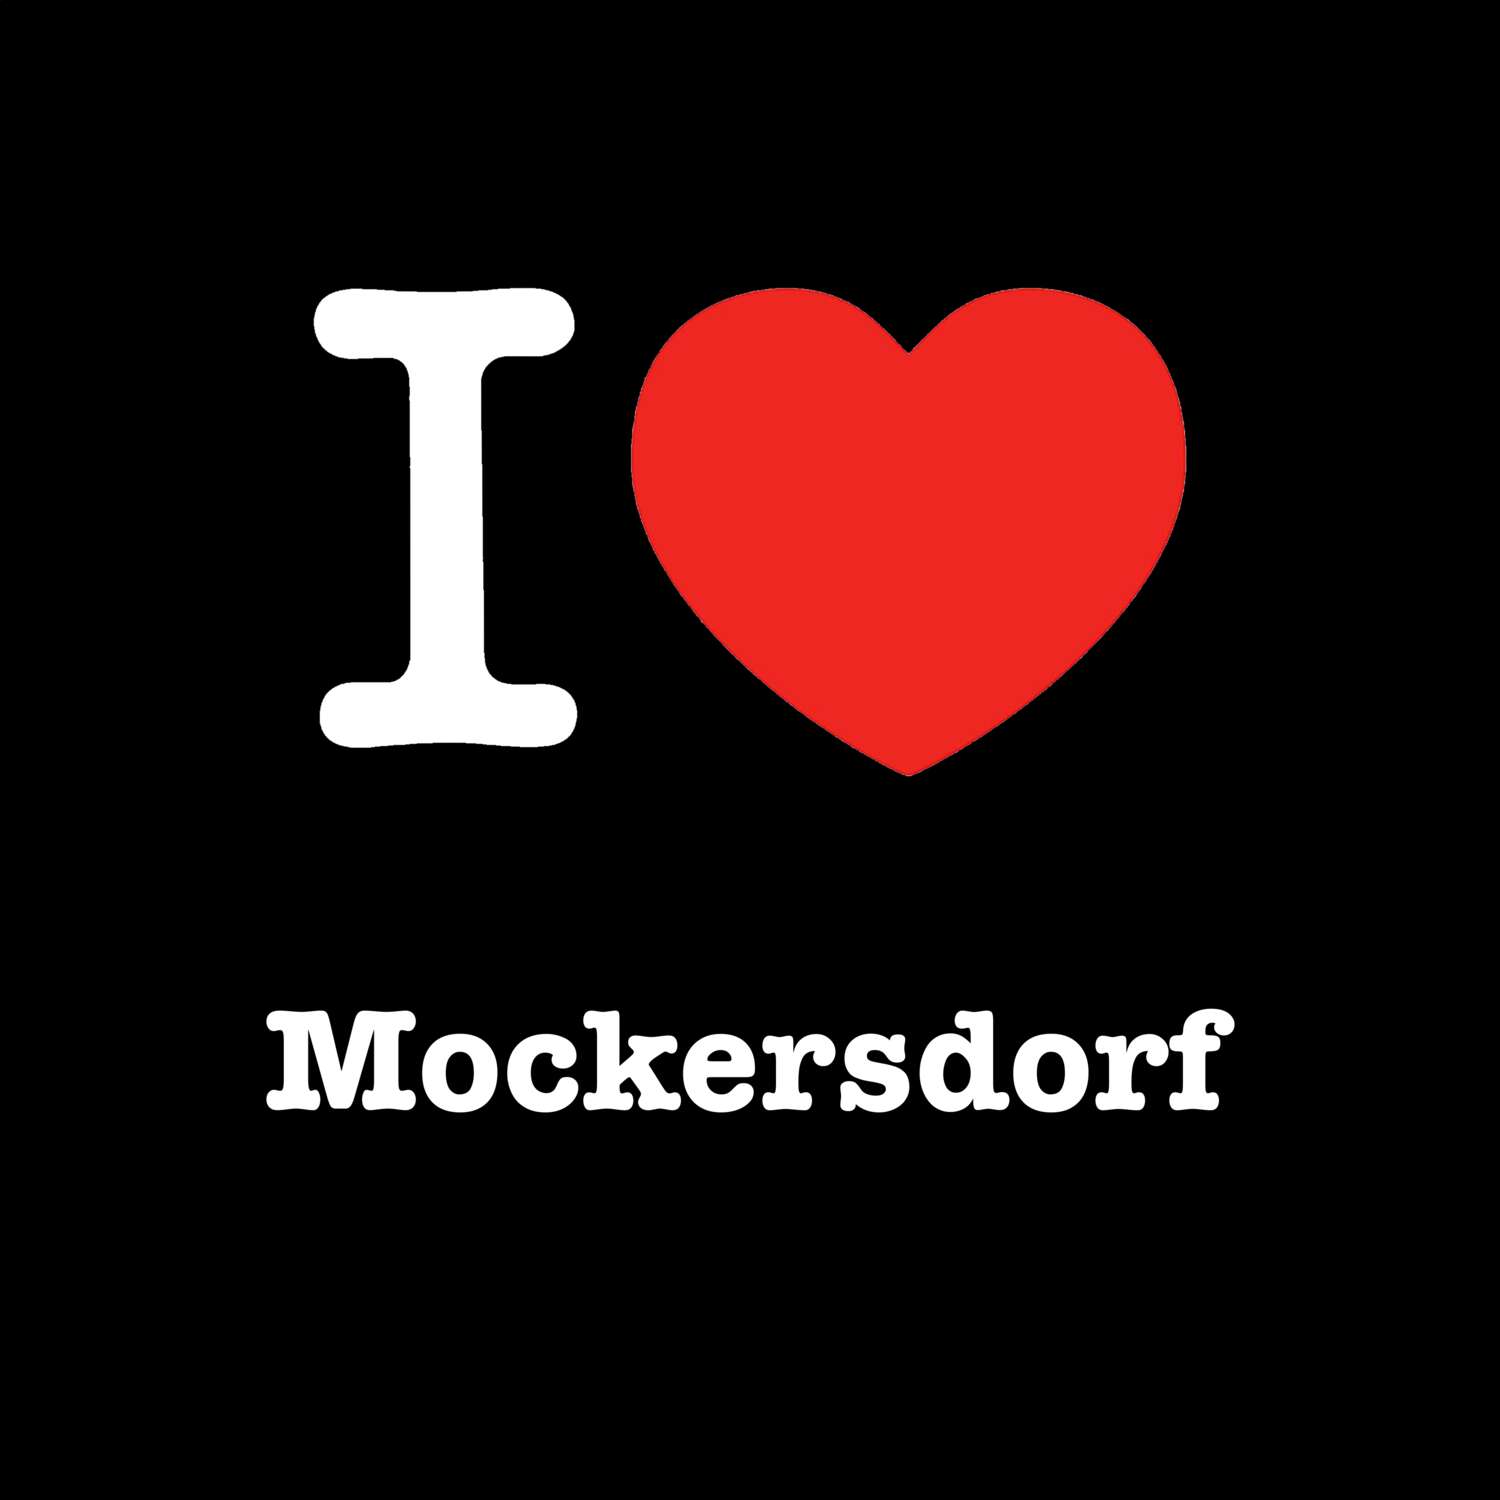 Mockersdorf T-Shirt »I love«